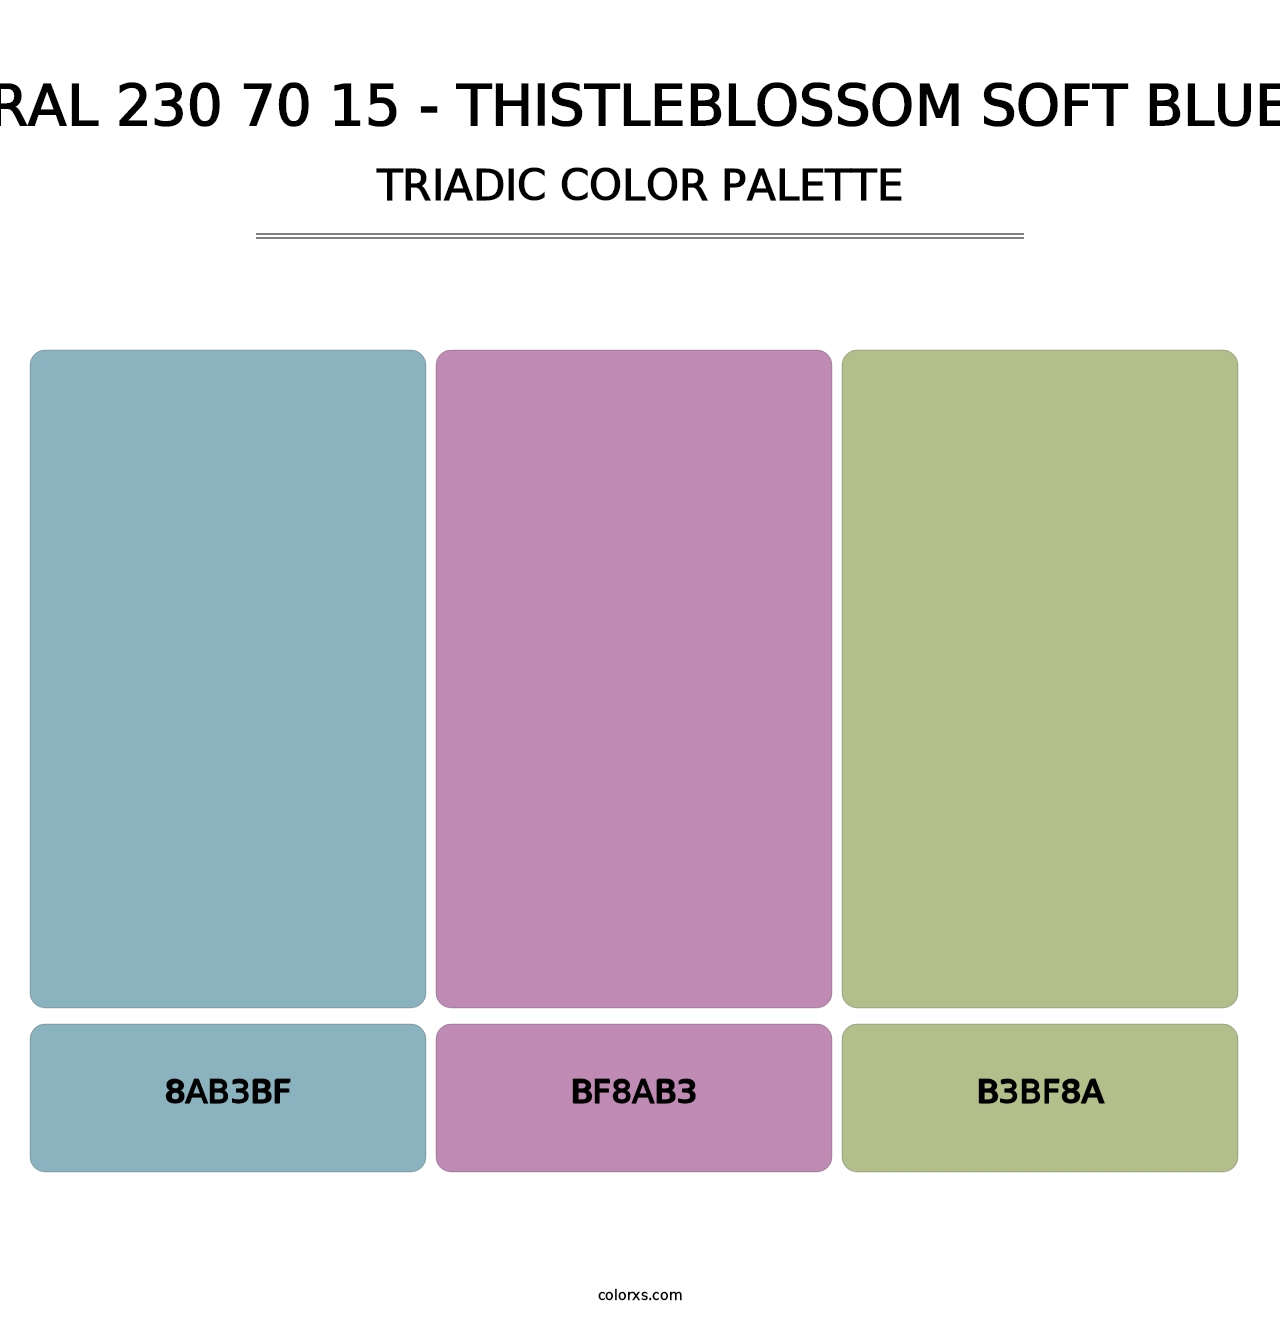 RAL 230 70 15 - Thistleblossom Soft Blue - Triadic Color Palette